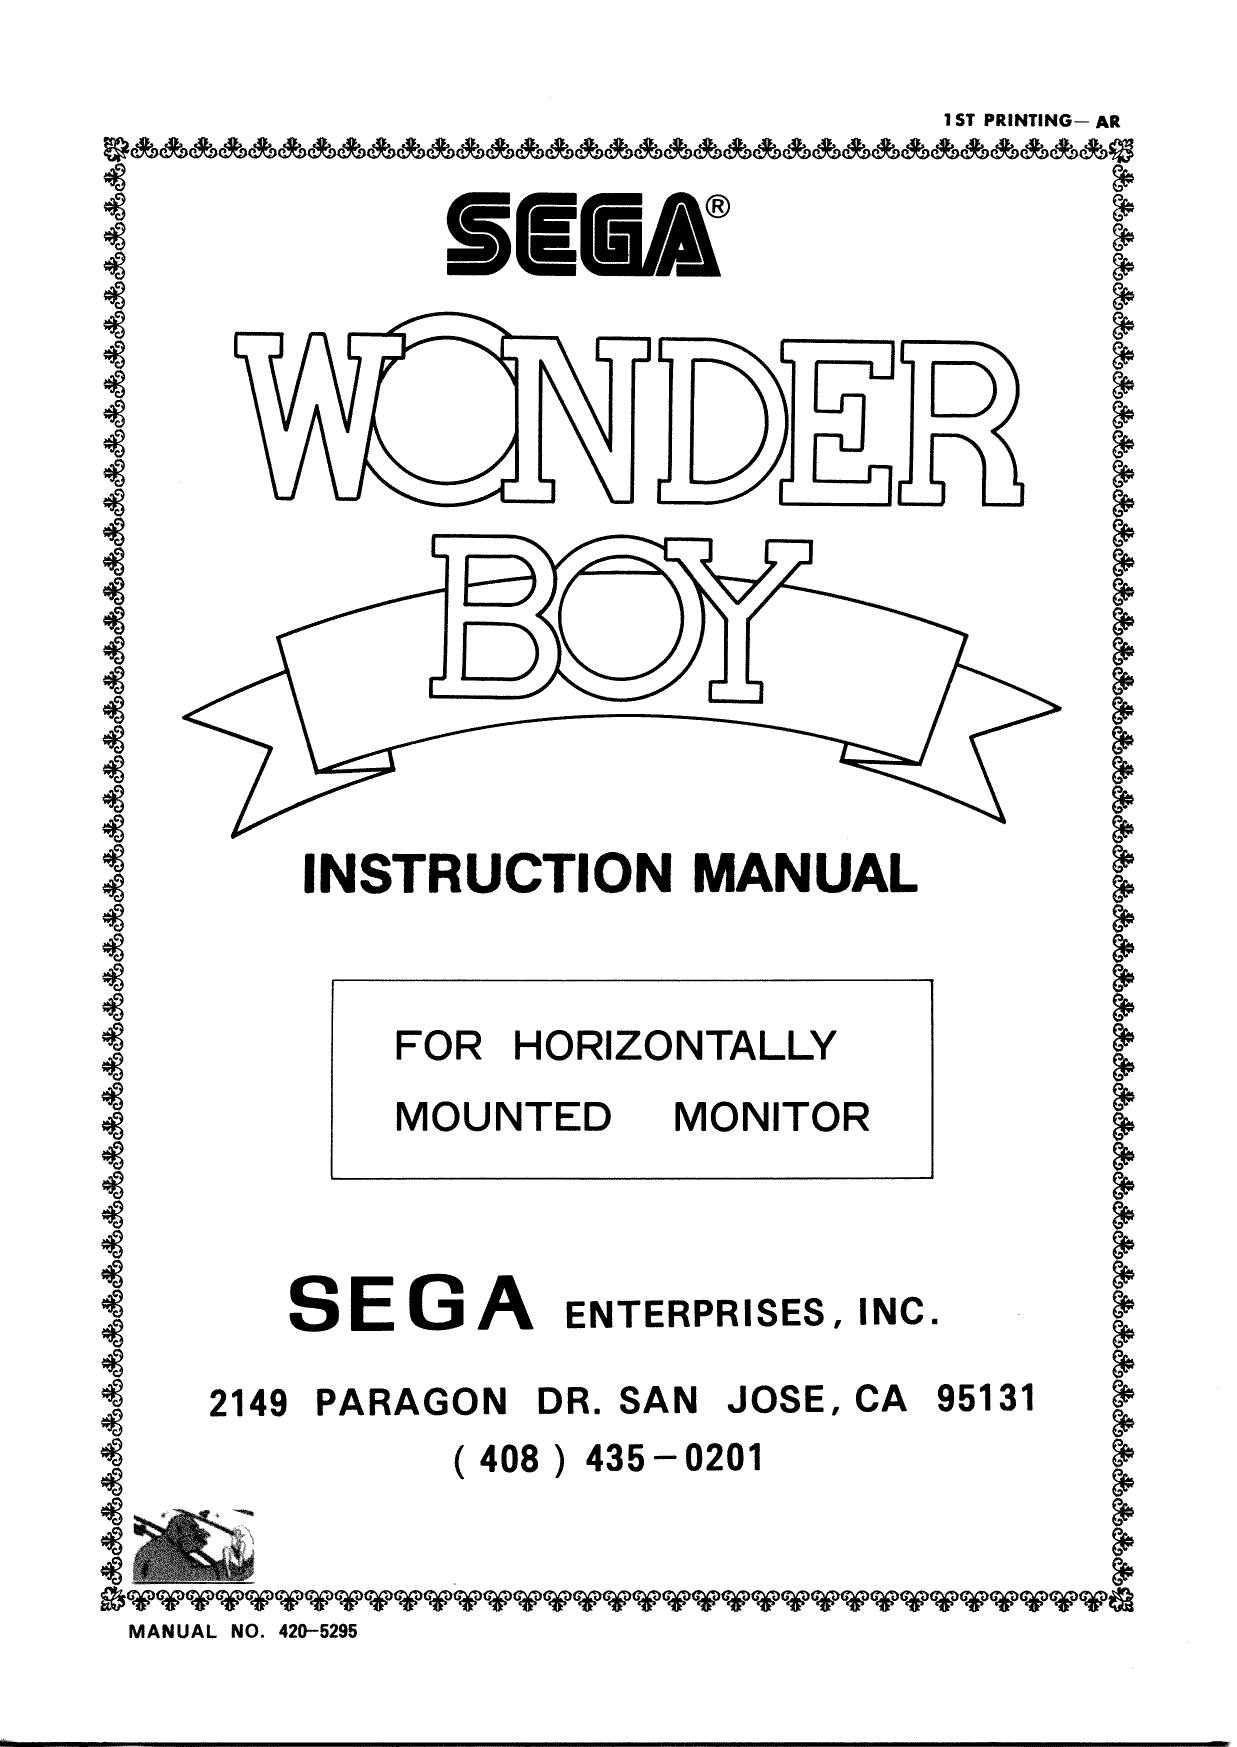 WonderBoy.man